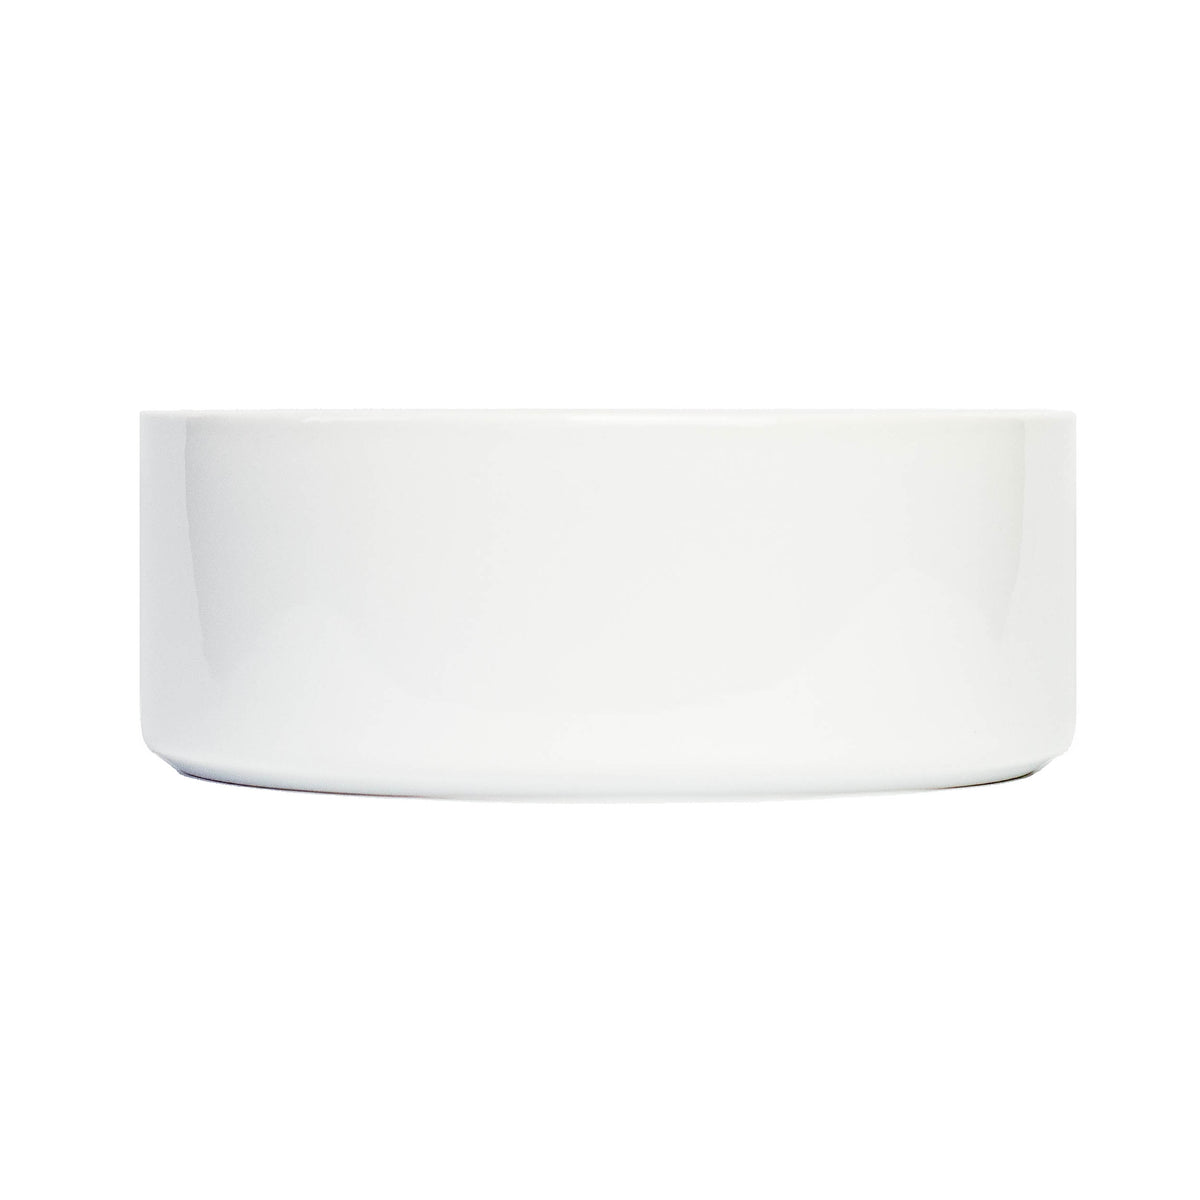 Personalised bowl for cats / ceramic - 22oz 650ml (design 3)